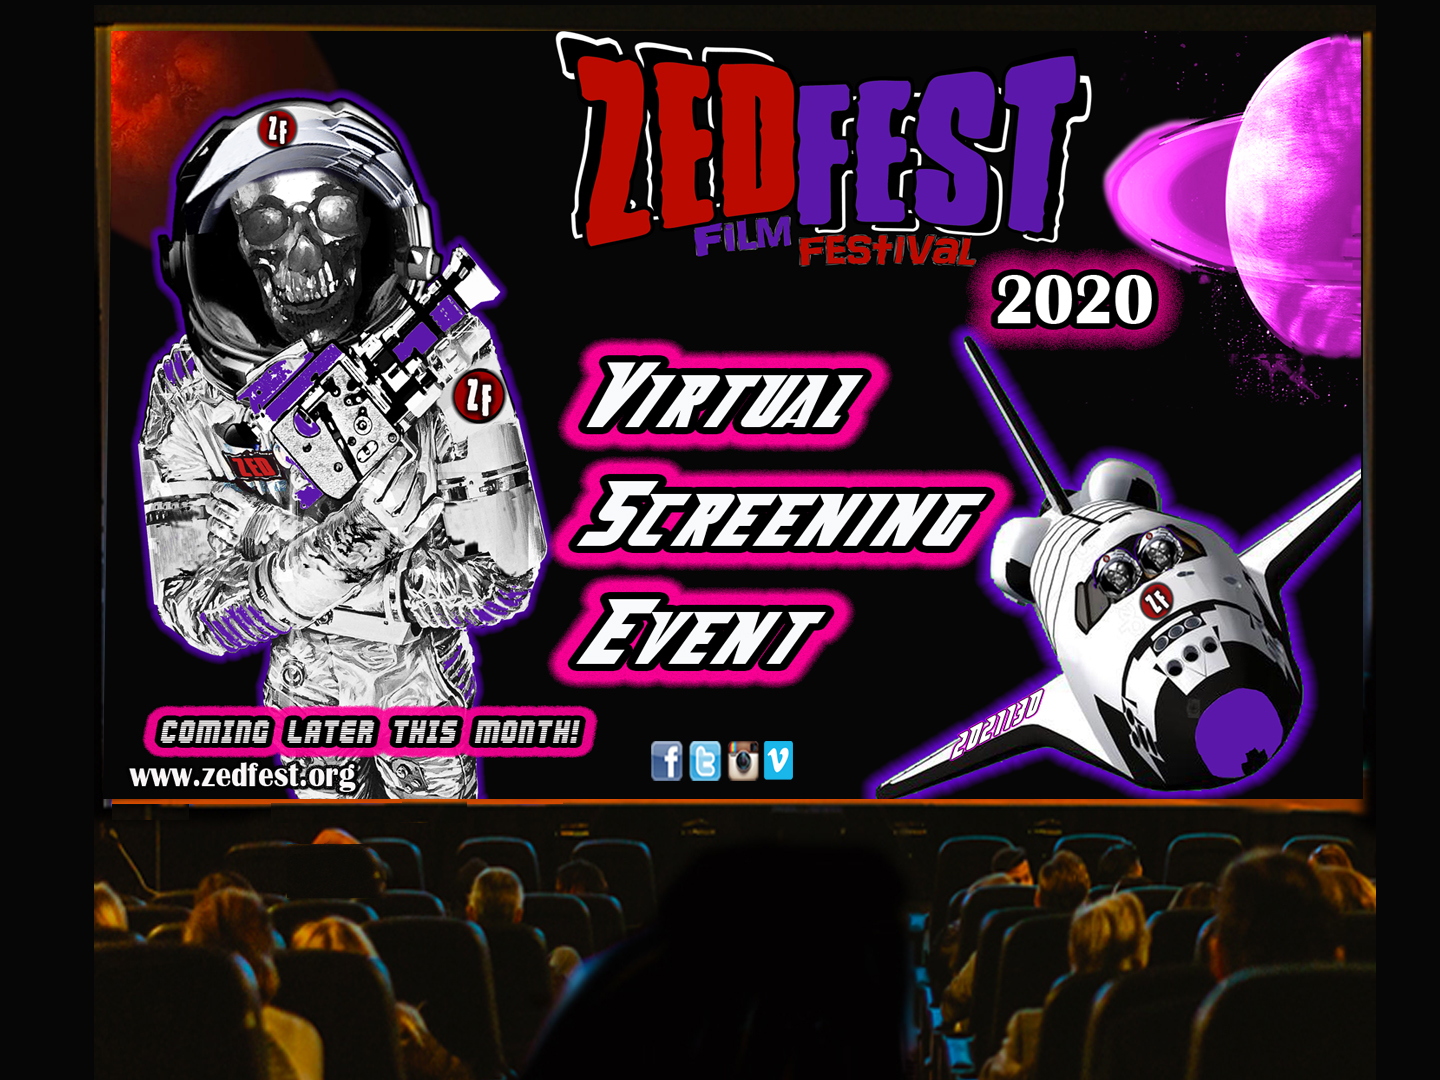 zed fest 2020 virtual event poster